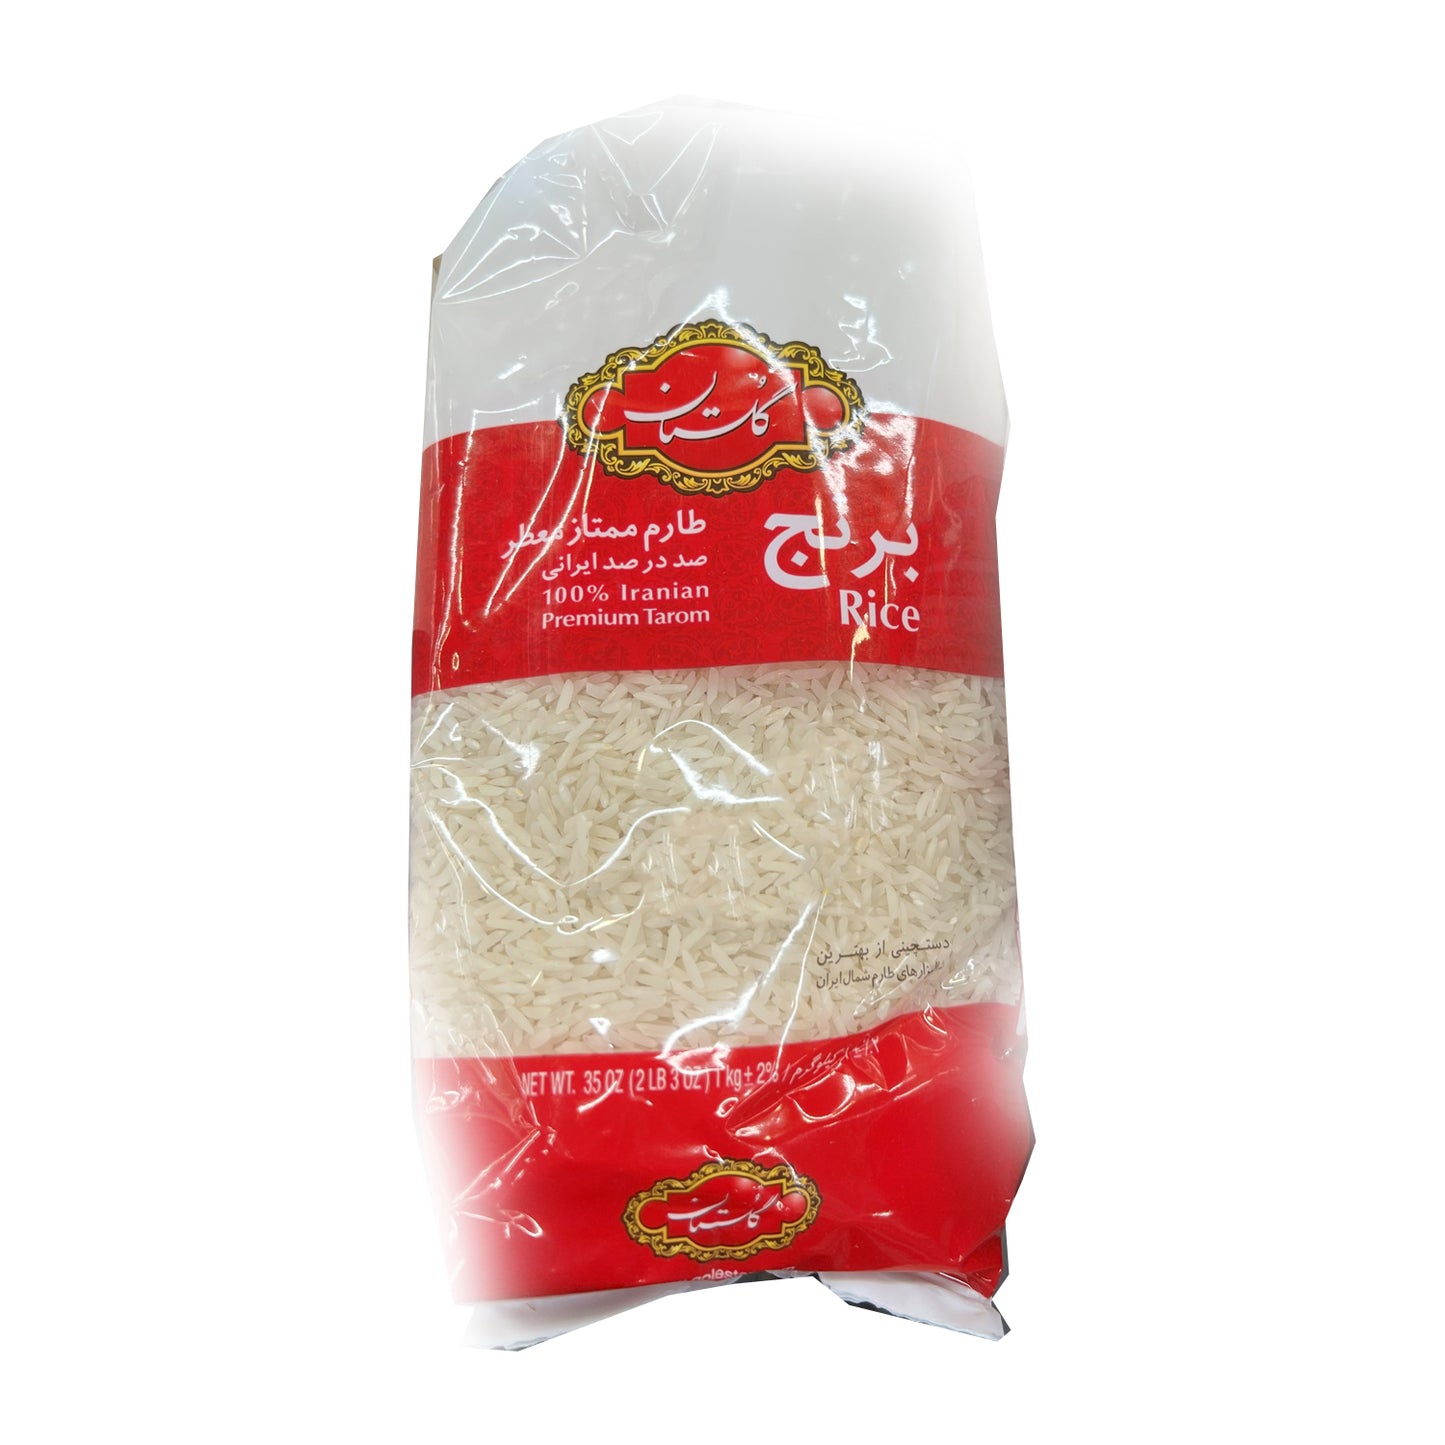 Golestat Iranian Premium Tarom Rice 1kg